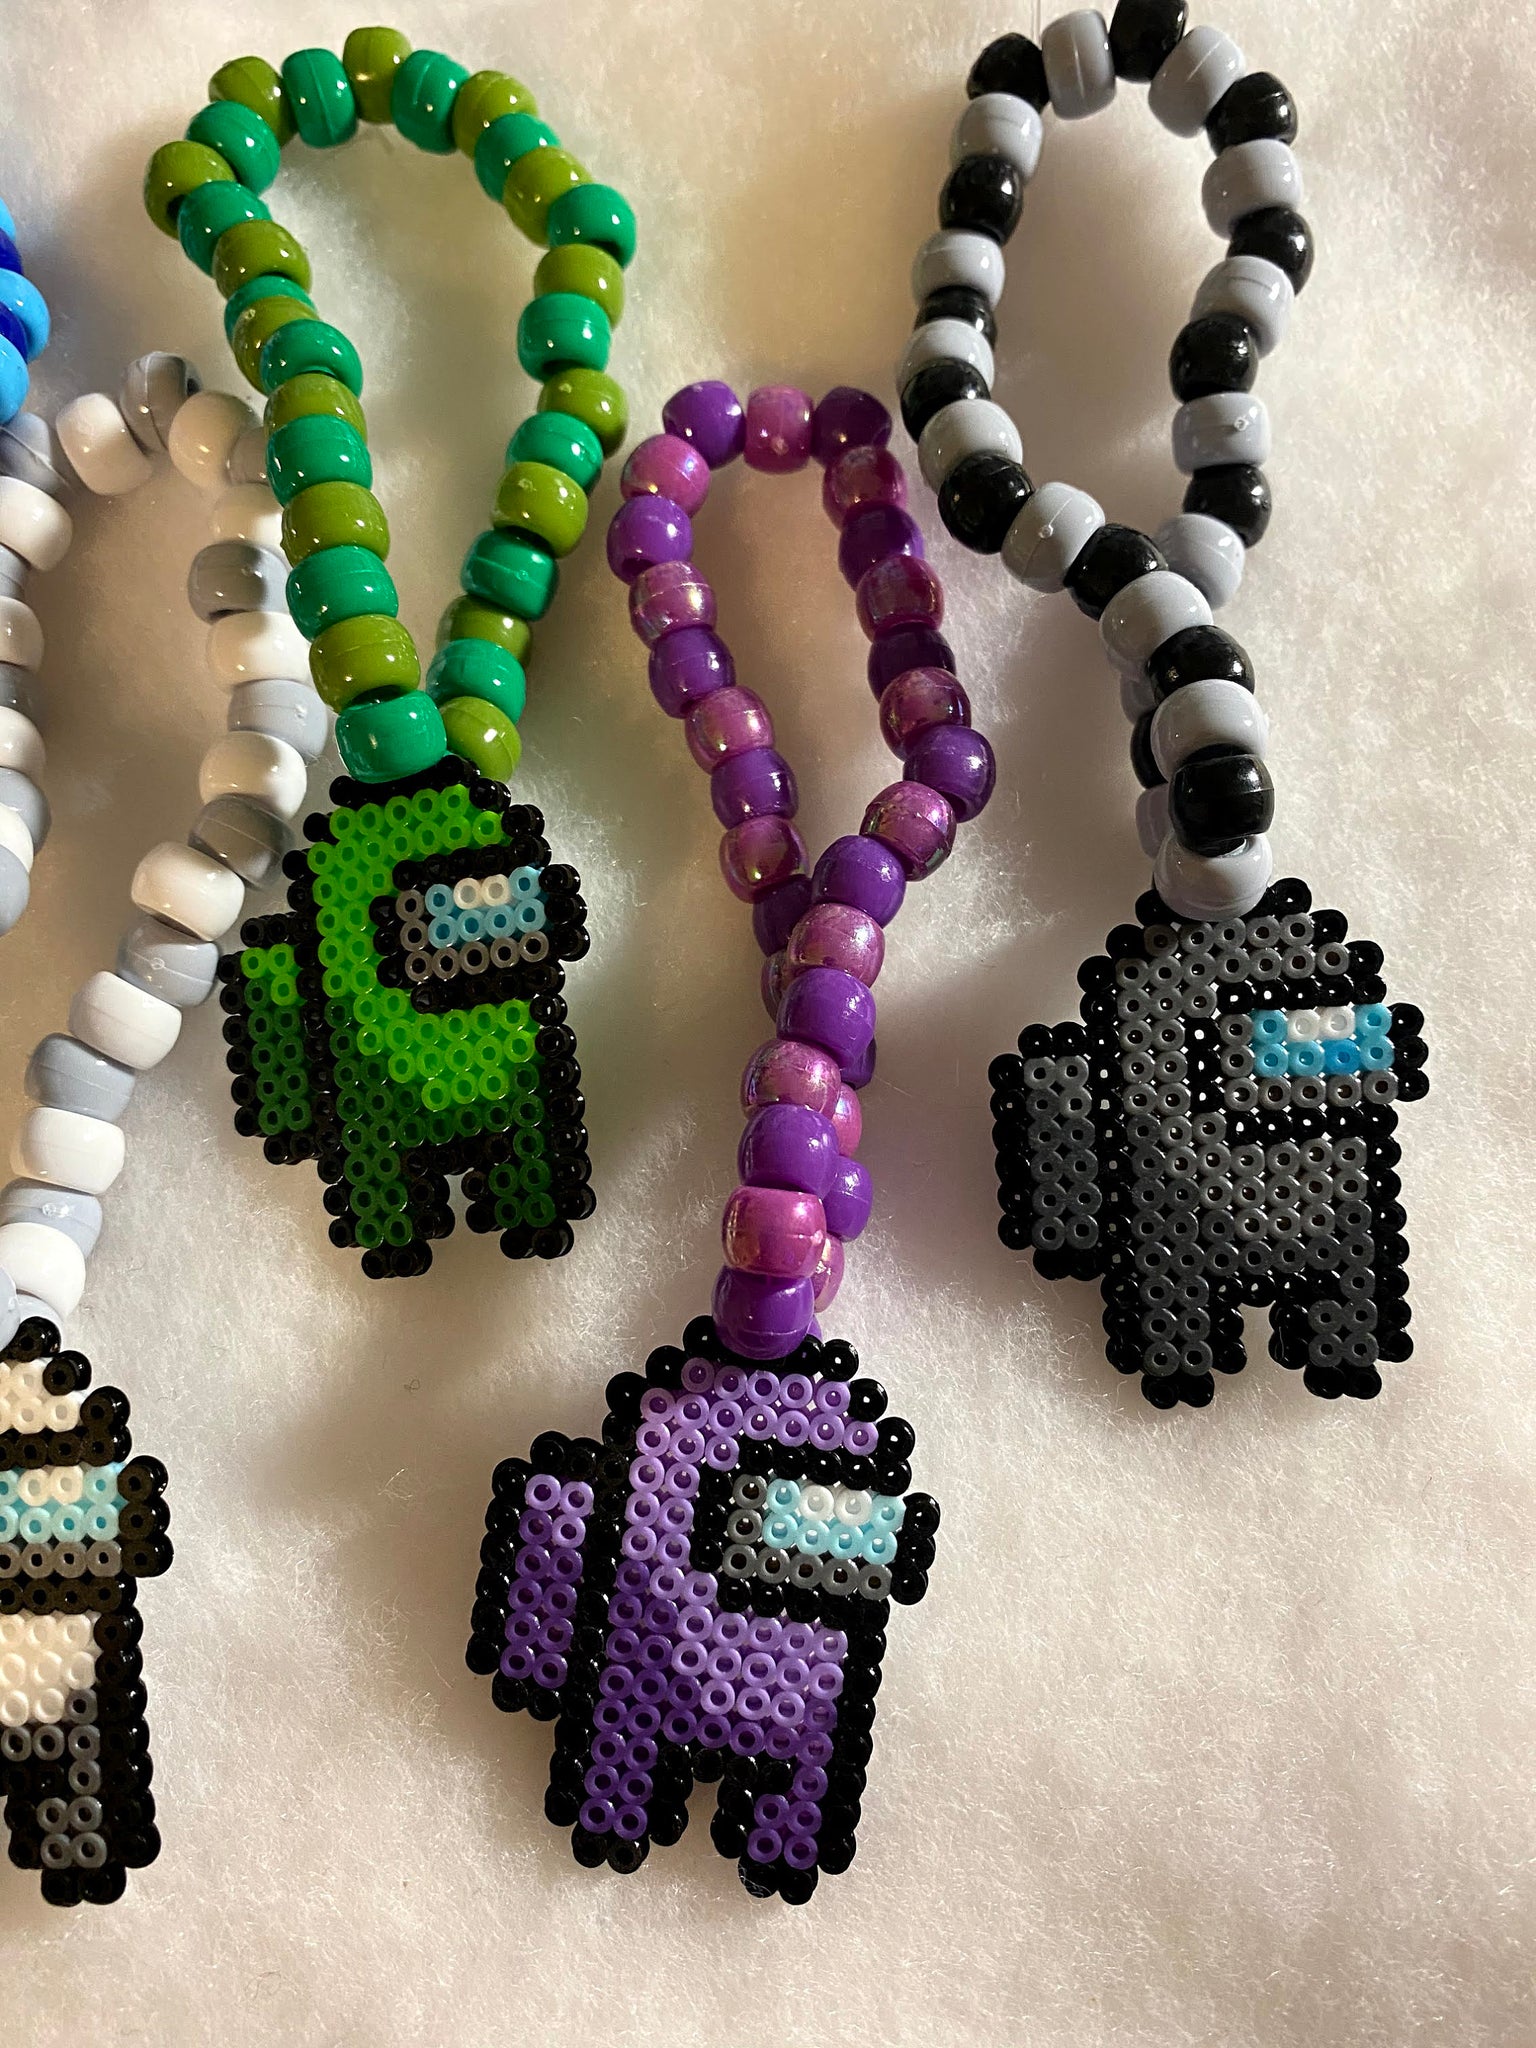 Gaming Kandi Bracelets, Perler Mini Bead, Video Game Art – GalaxyofPixels